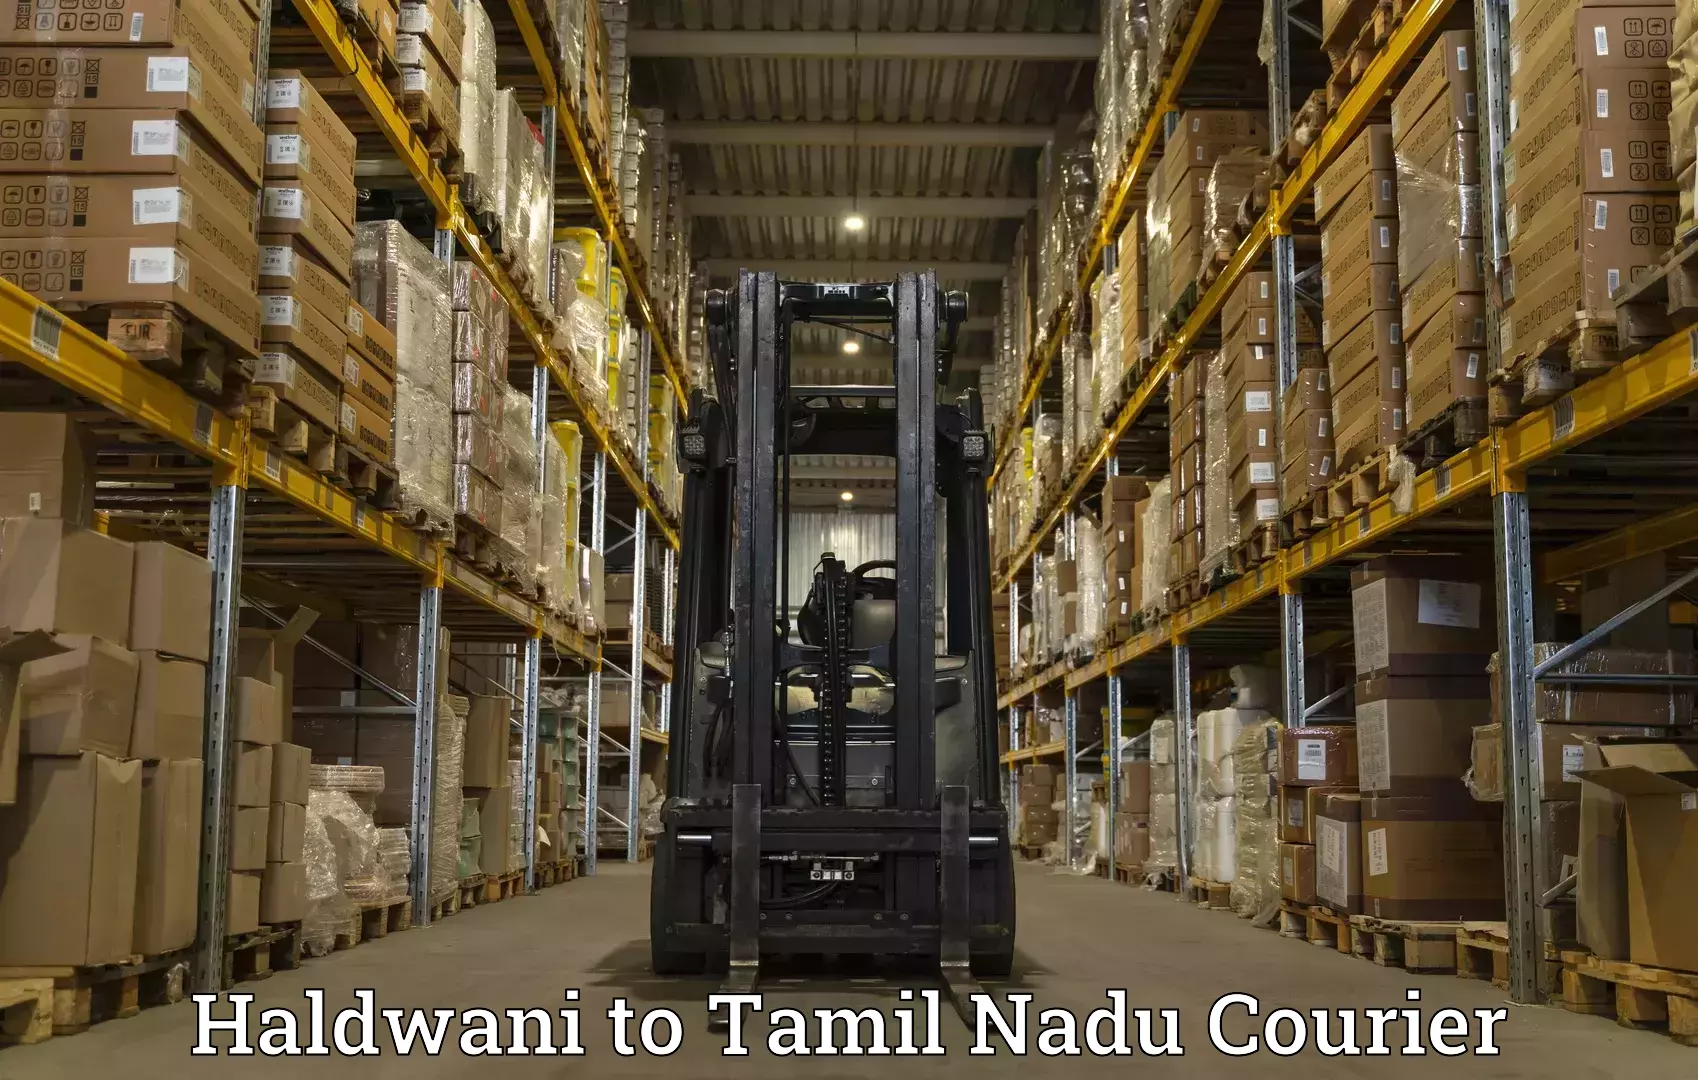 Courier service comparison Haldwani to Chennai